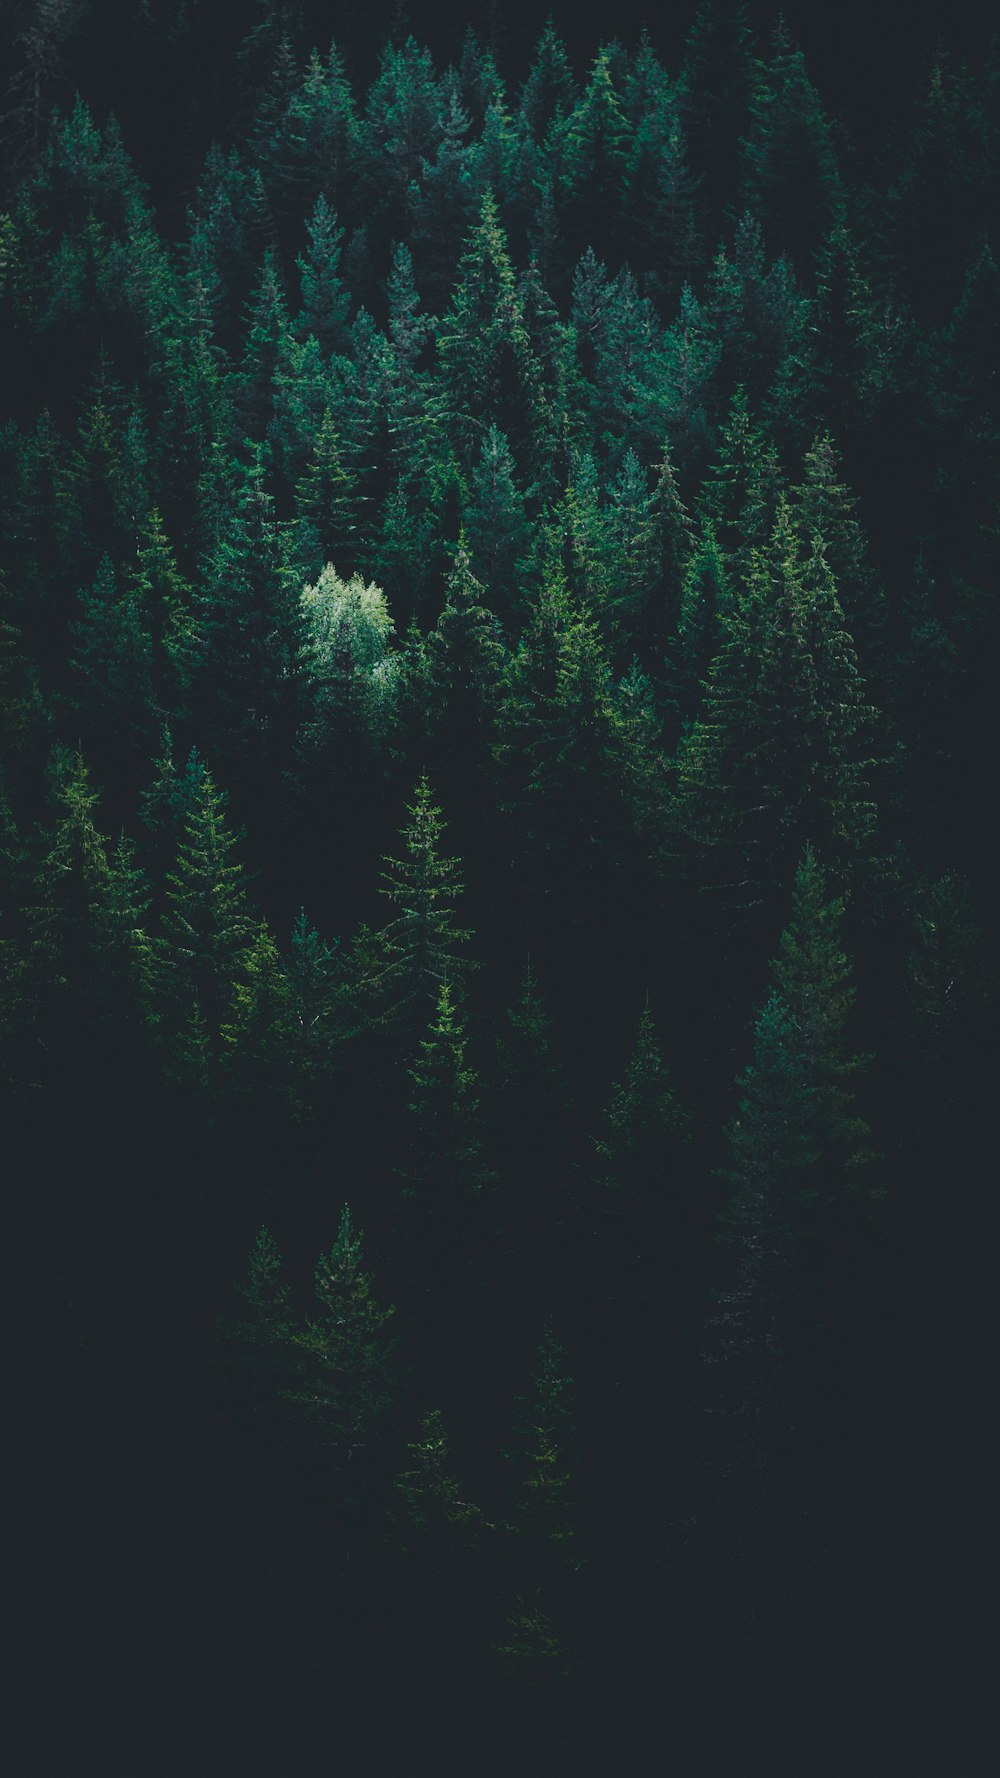 Szenerie aus Waldbäumen